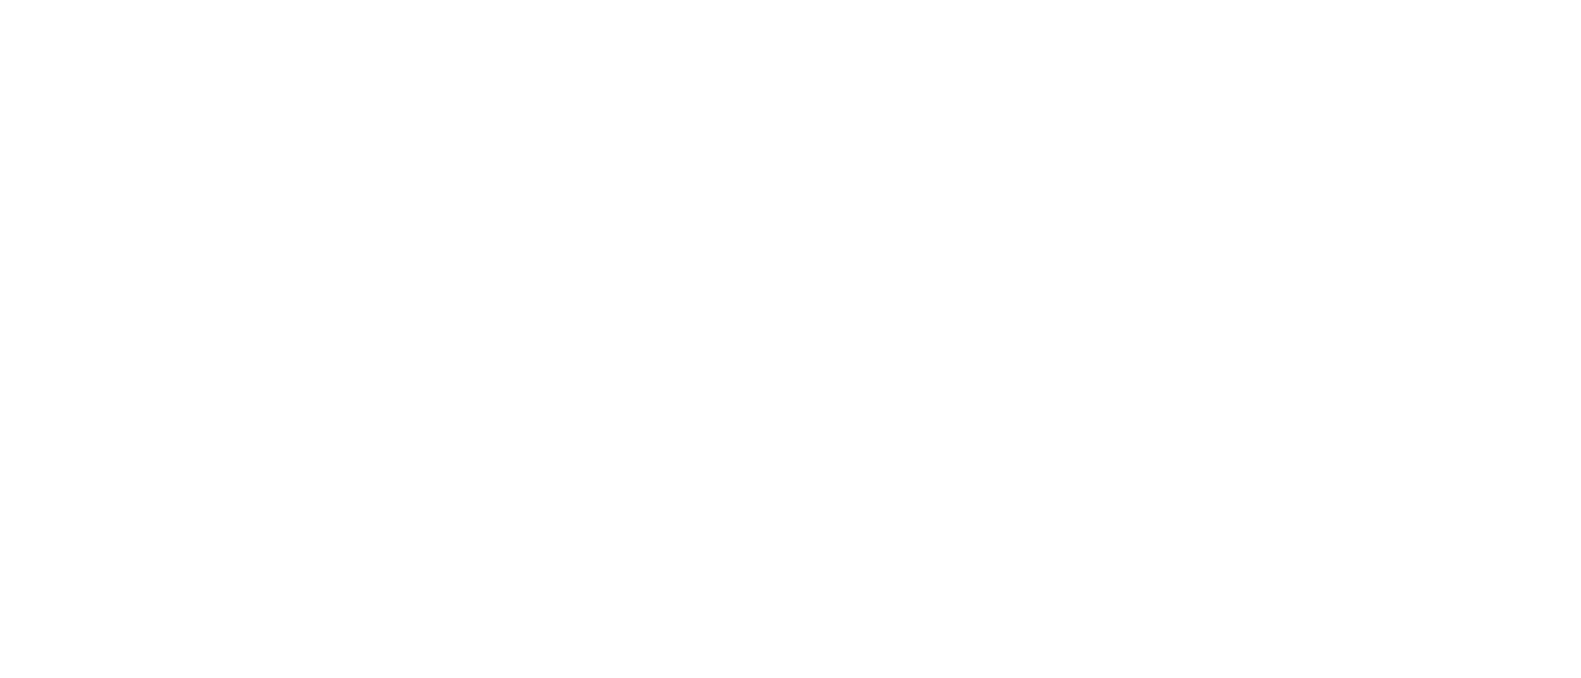 CJ Retail Solutions